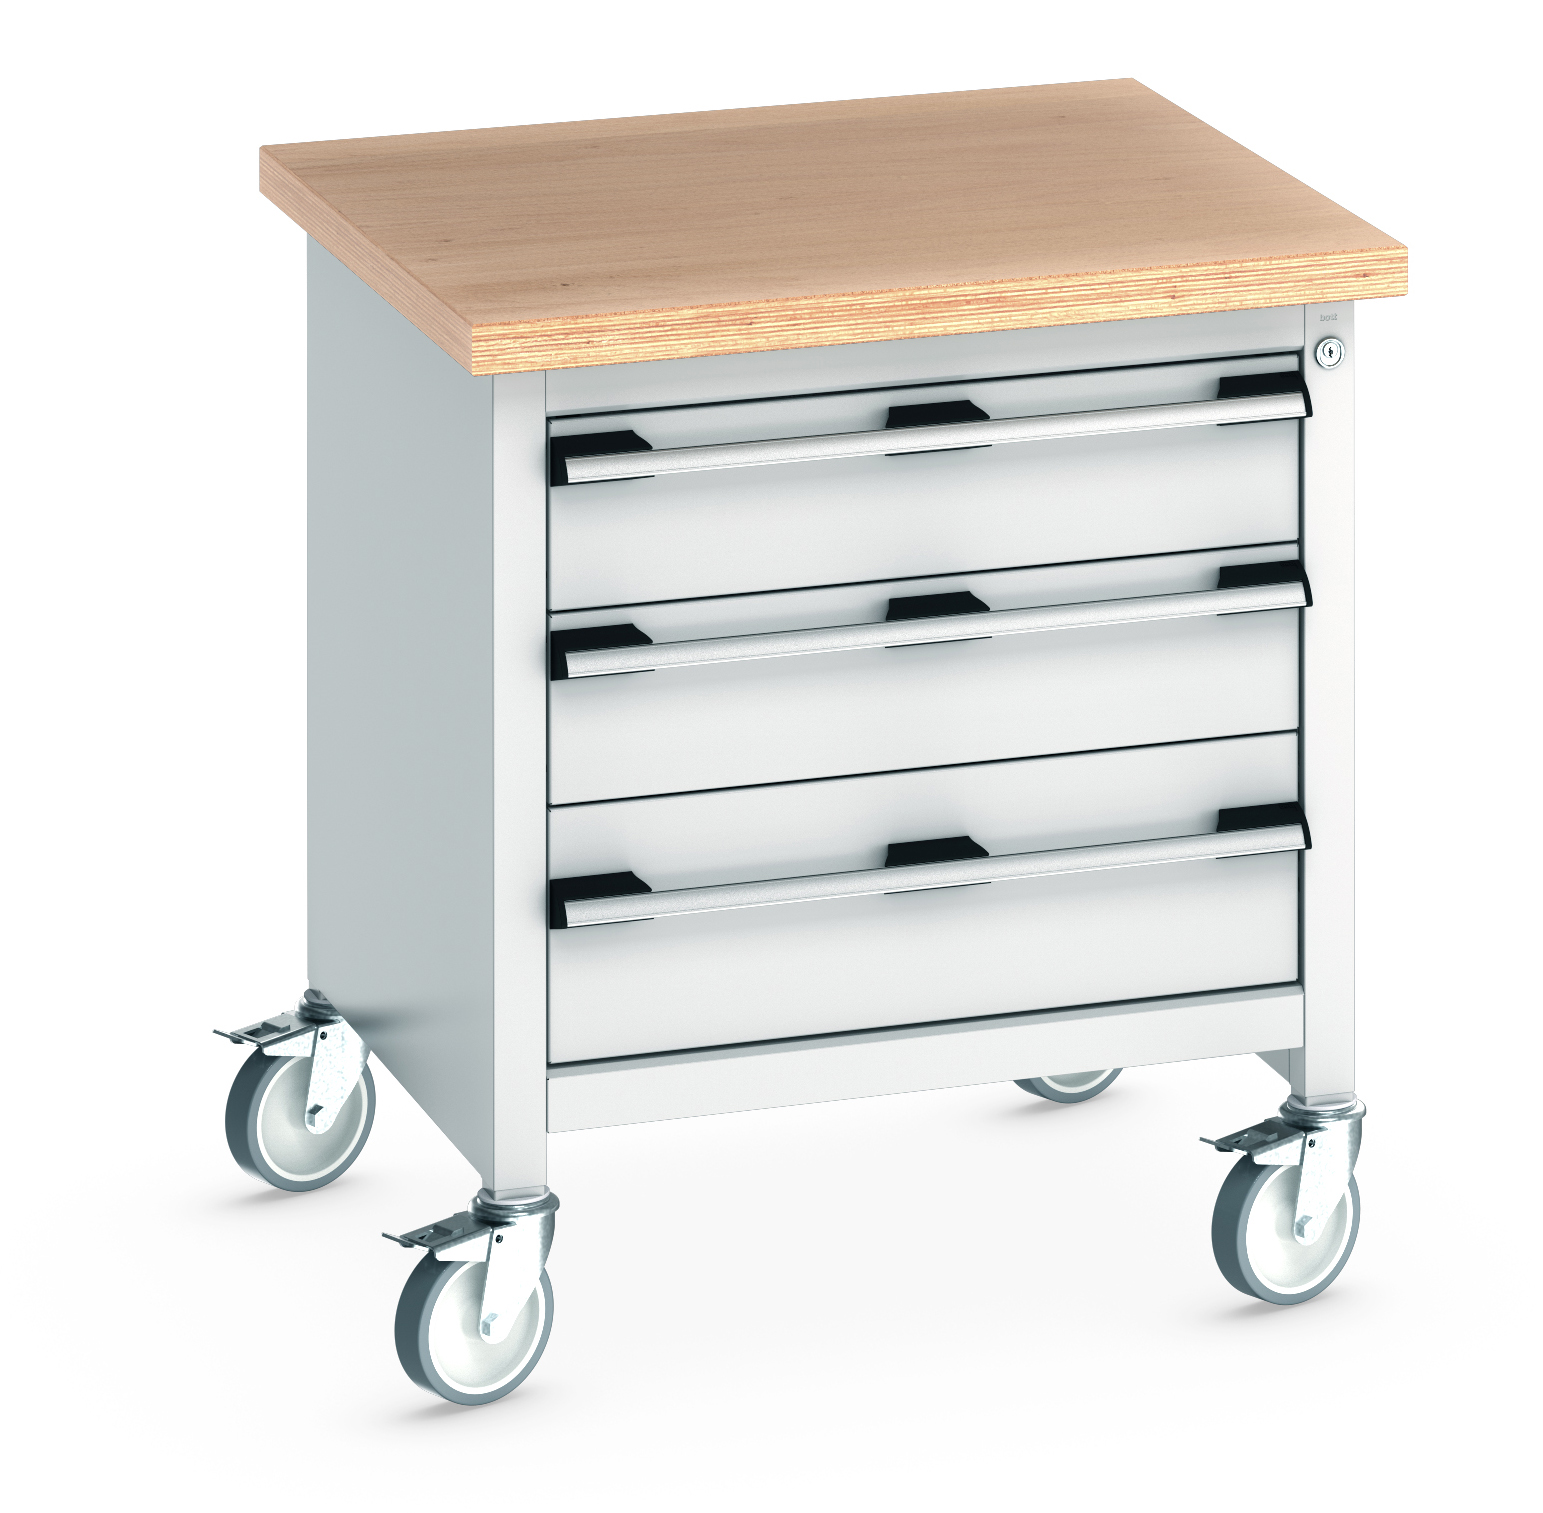 Bott Cubio Mobile Storage Bench With 3 Drawer Cabinet - 41002091.16V